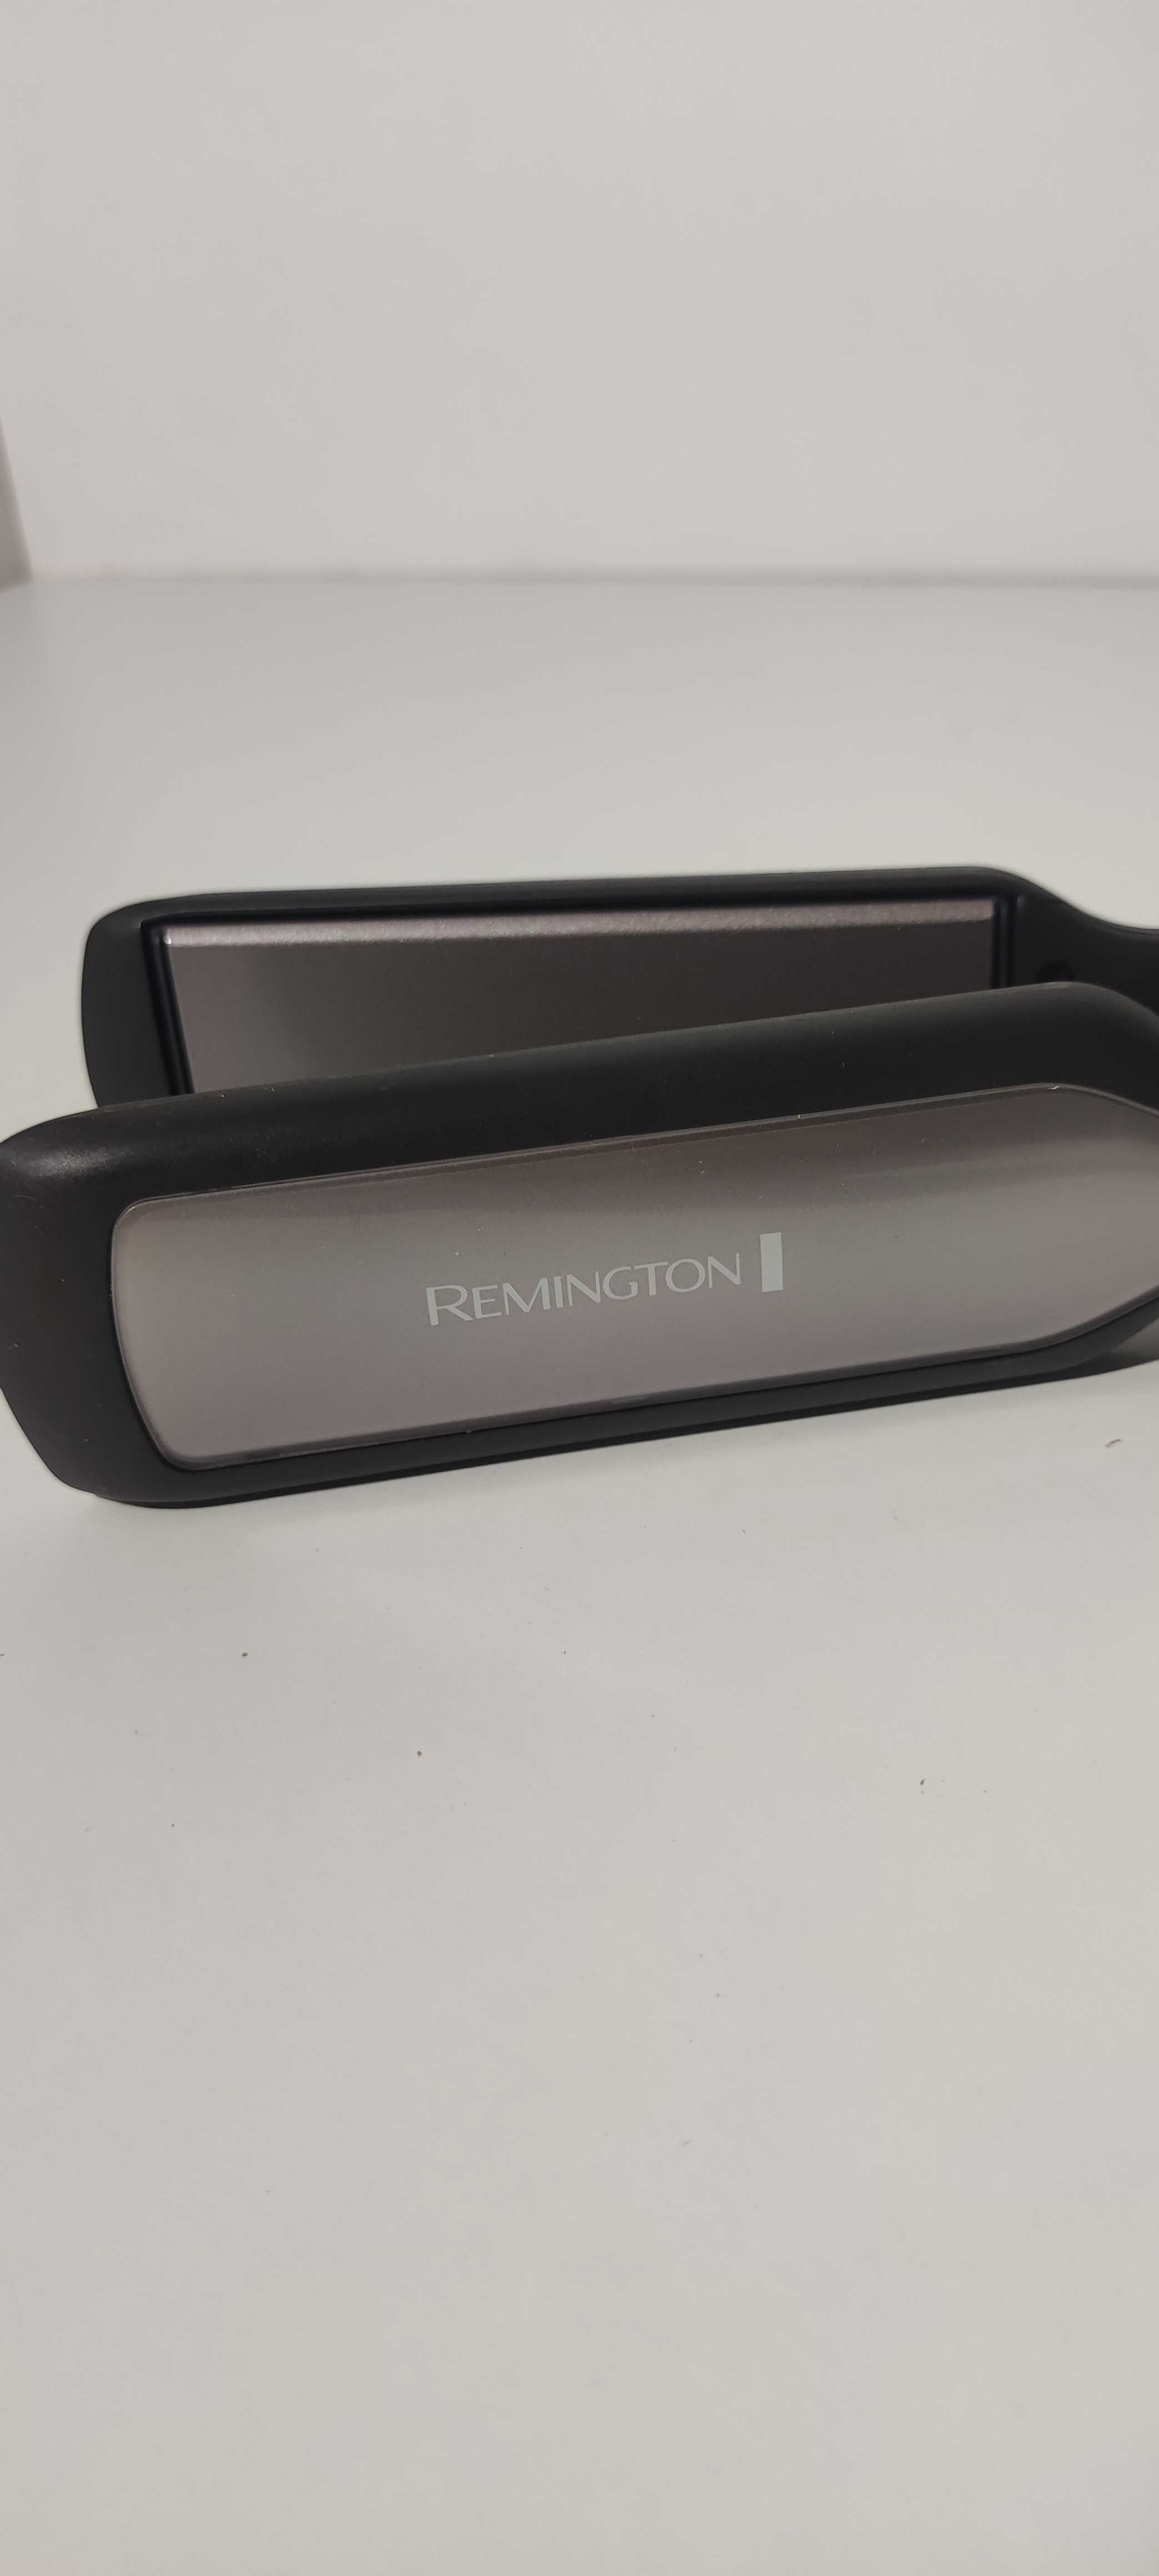 Prostownica Remington s5525